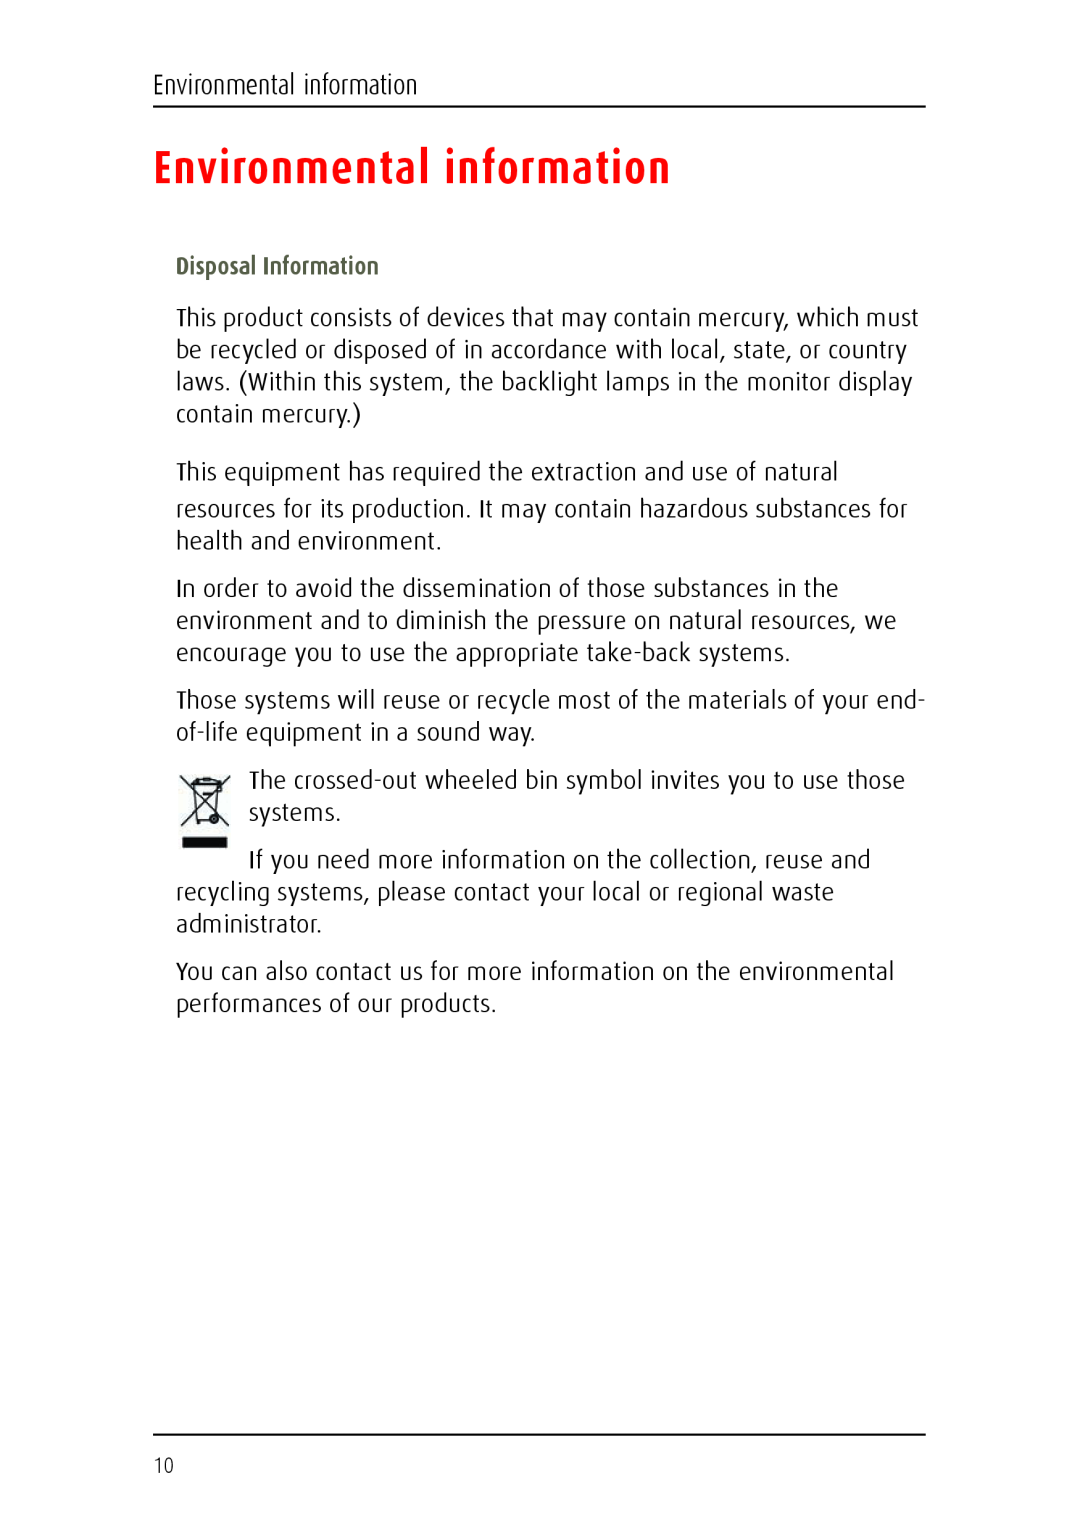 Barco MDCC 6130 manual Environmental information, Disposal Information 